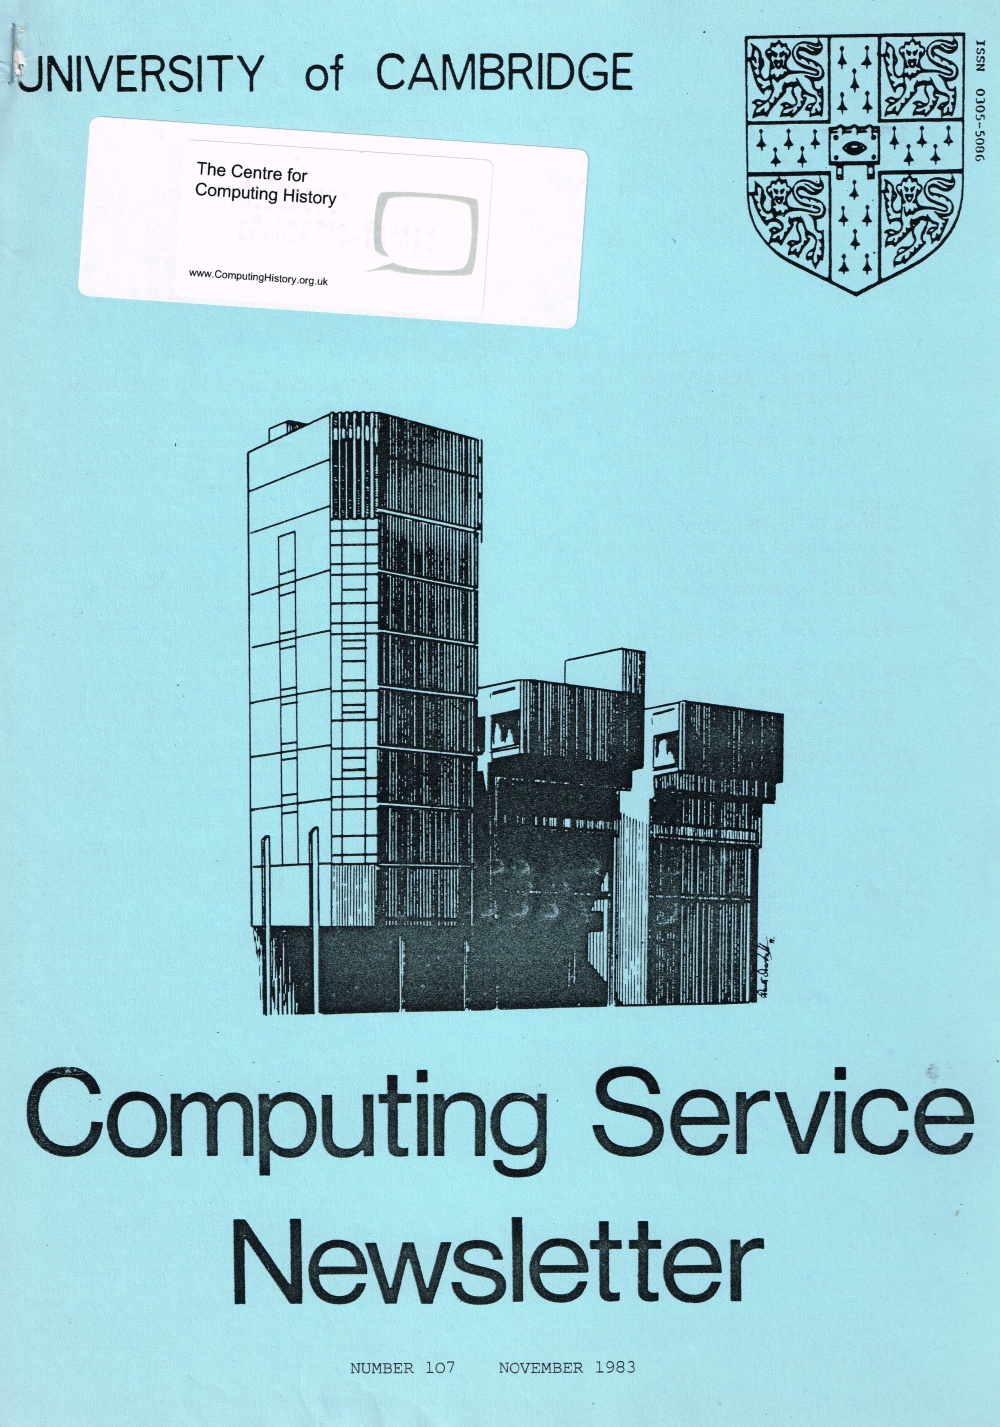 Article: University of Cambridge Computing Service November 1983 Newsletter 107